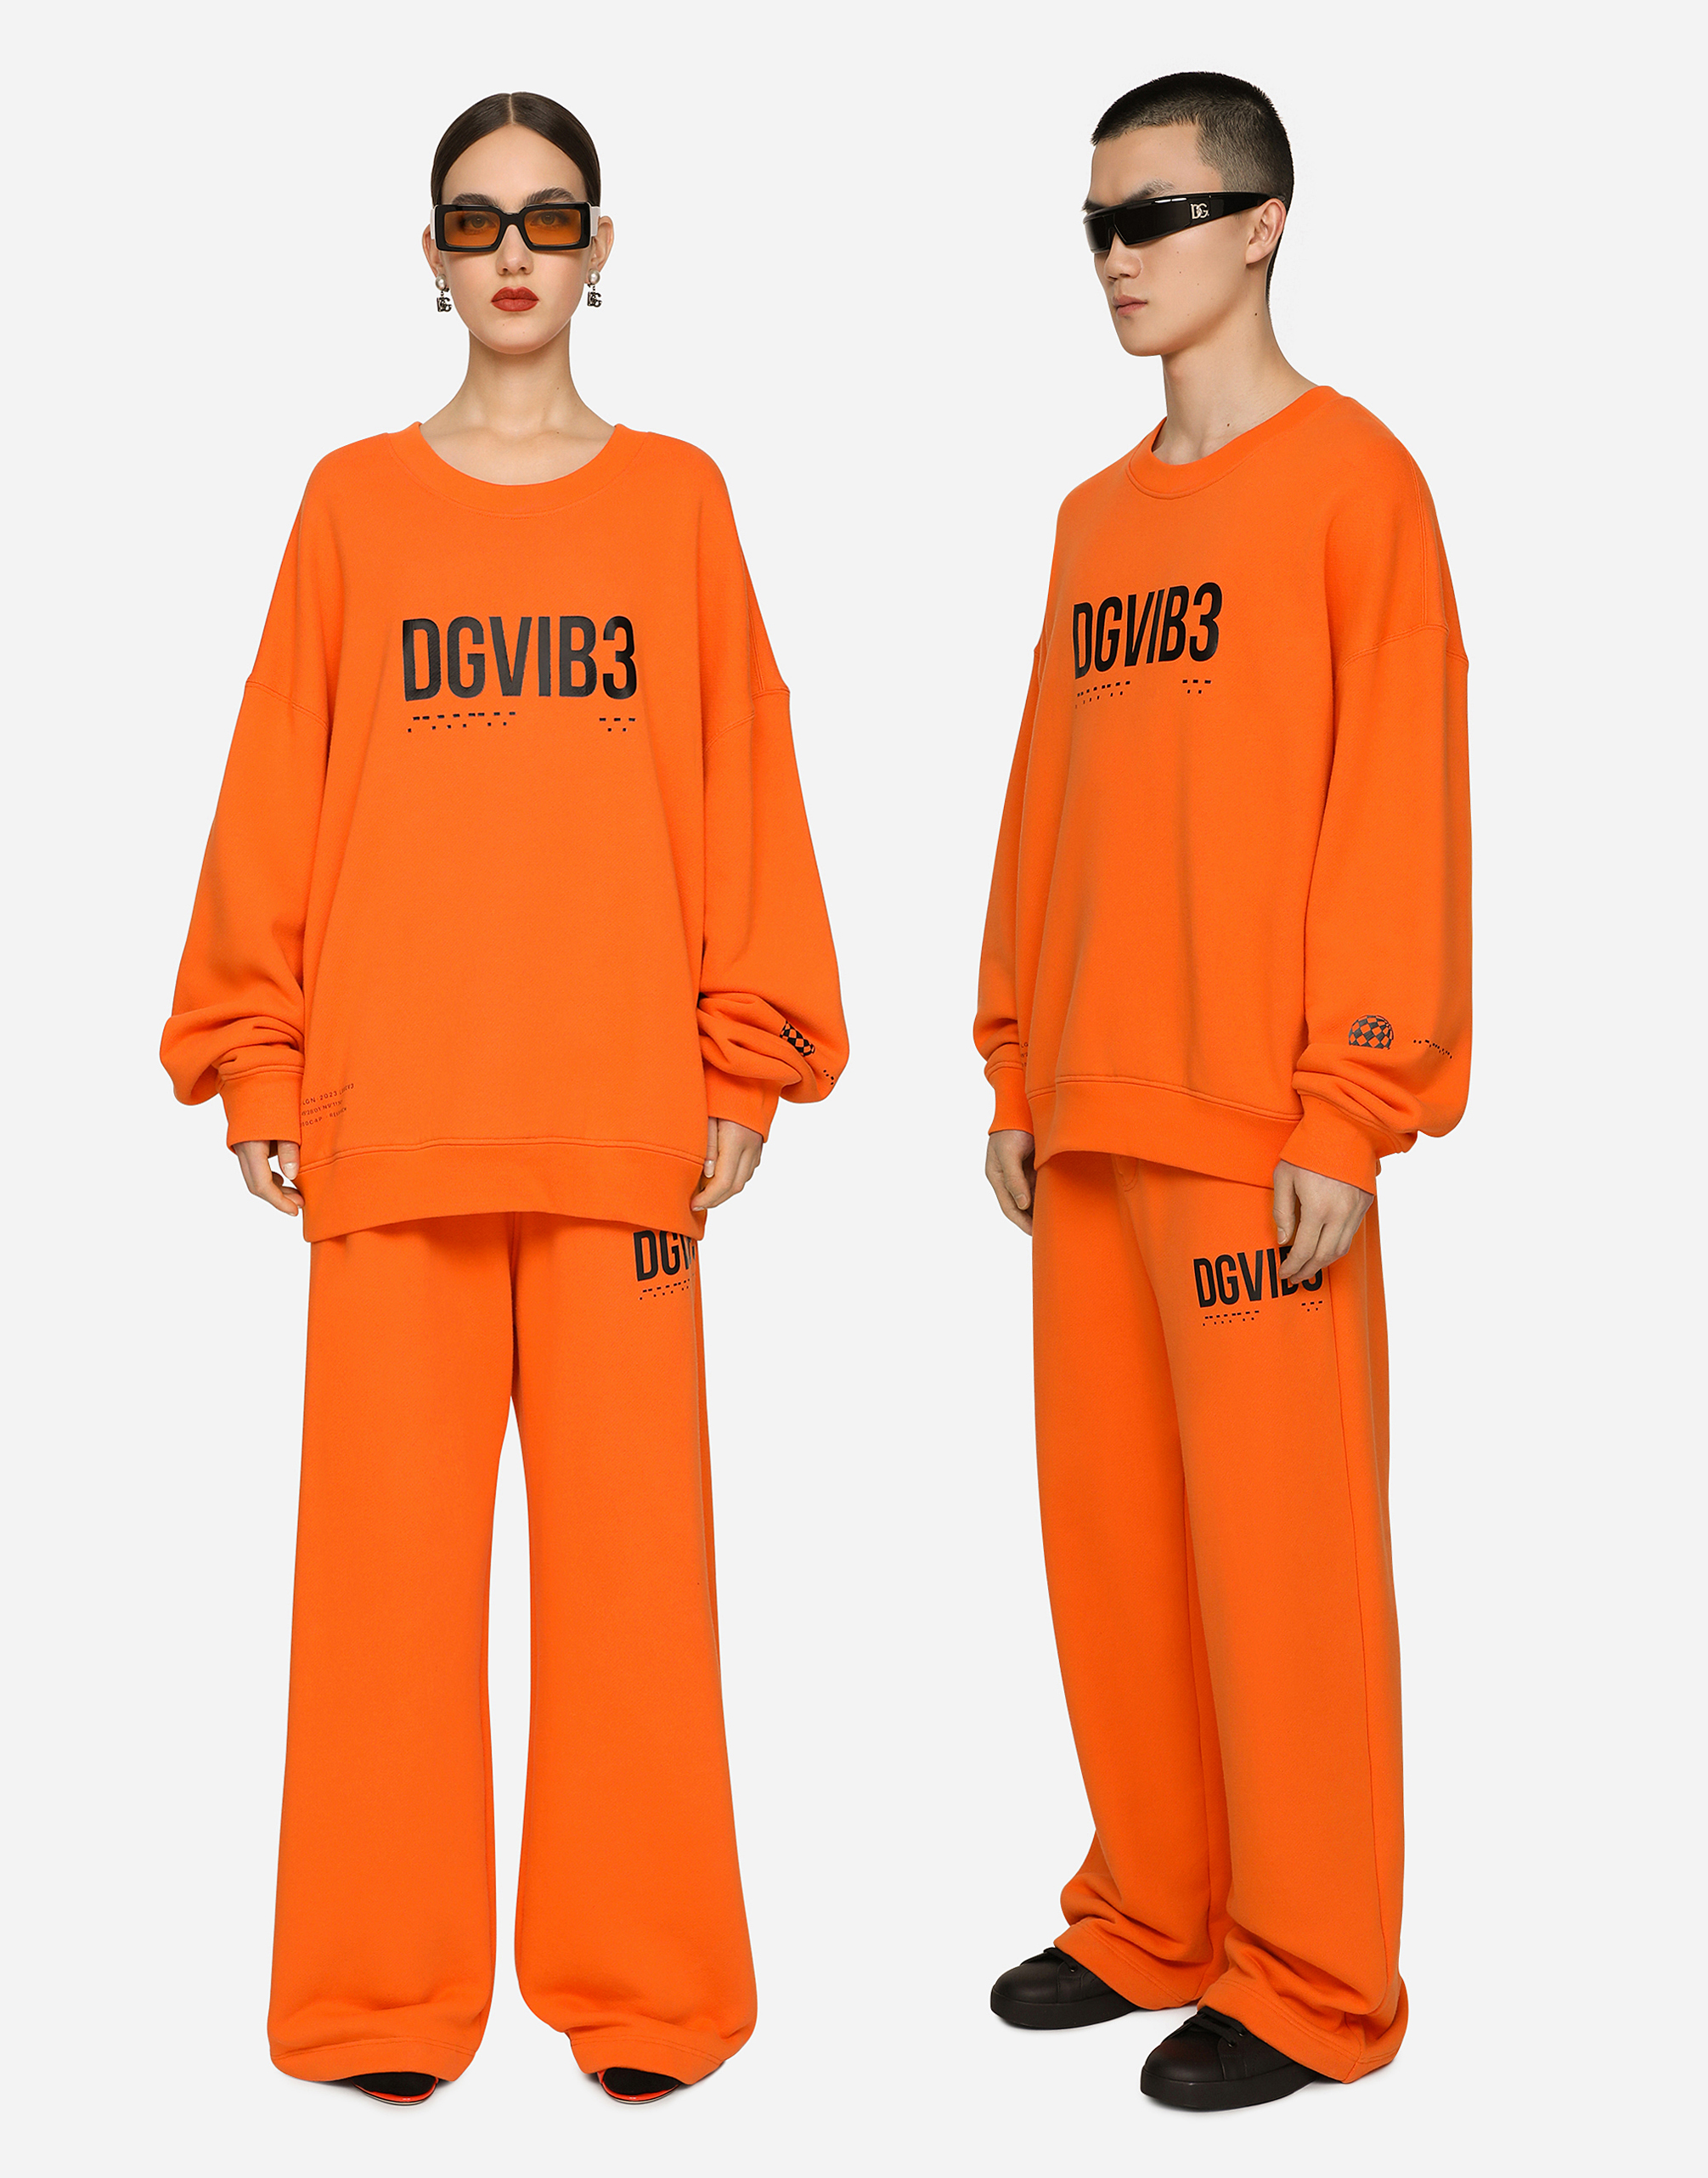 Dolce & Gabbana Jersey Sweatshirt With Dg Vib3 Print And Logo In Orange